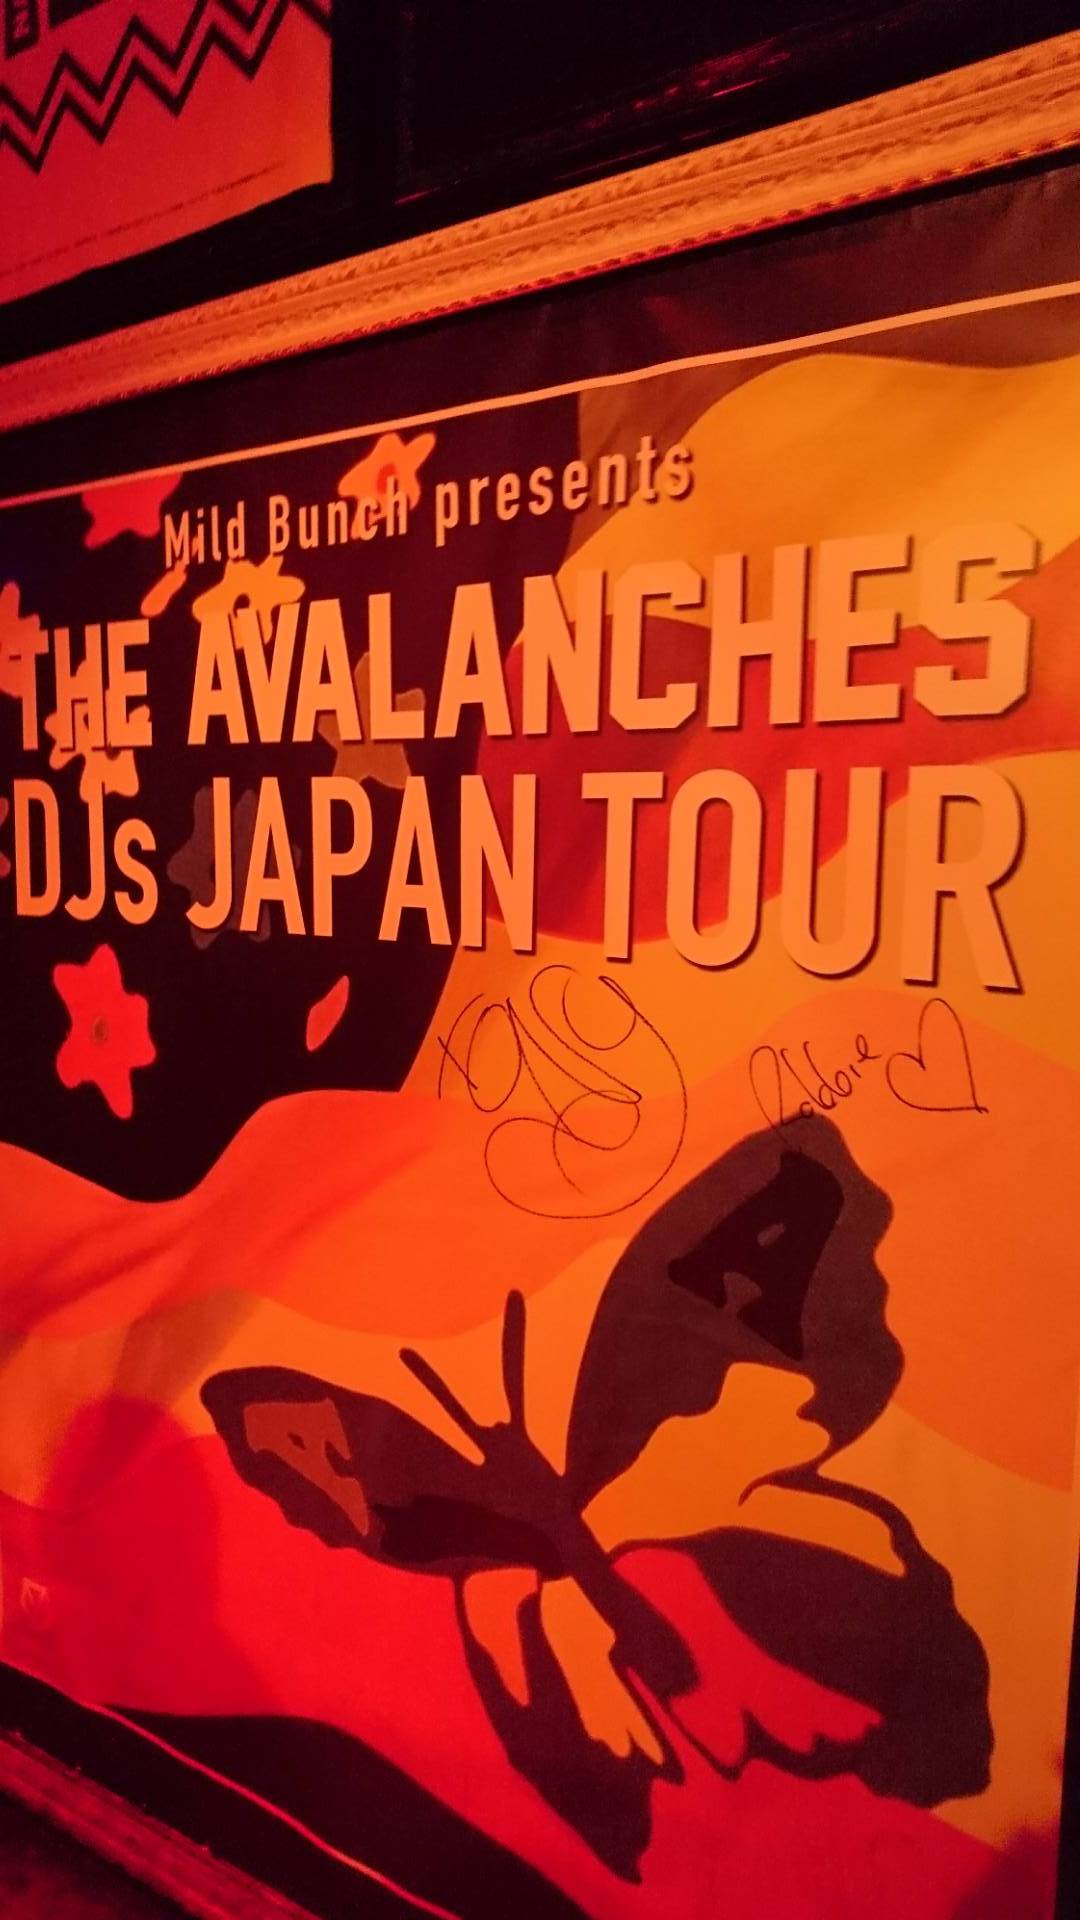 THE AVALANCHES DJs JAPAN TOUR at Sound Museum Vision_c0002171_07054647.jpg